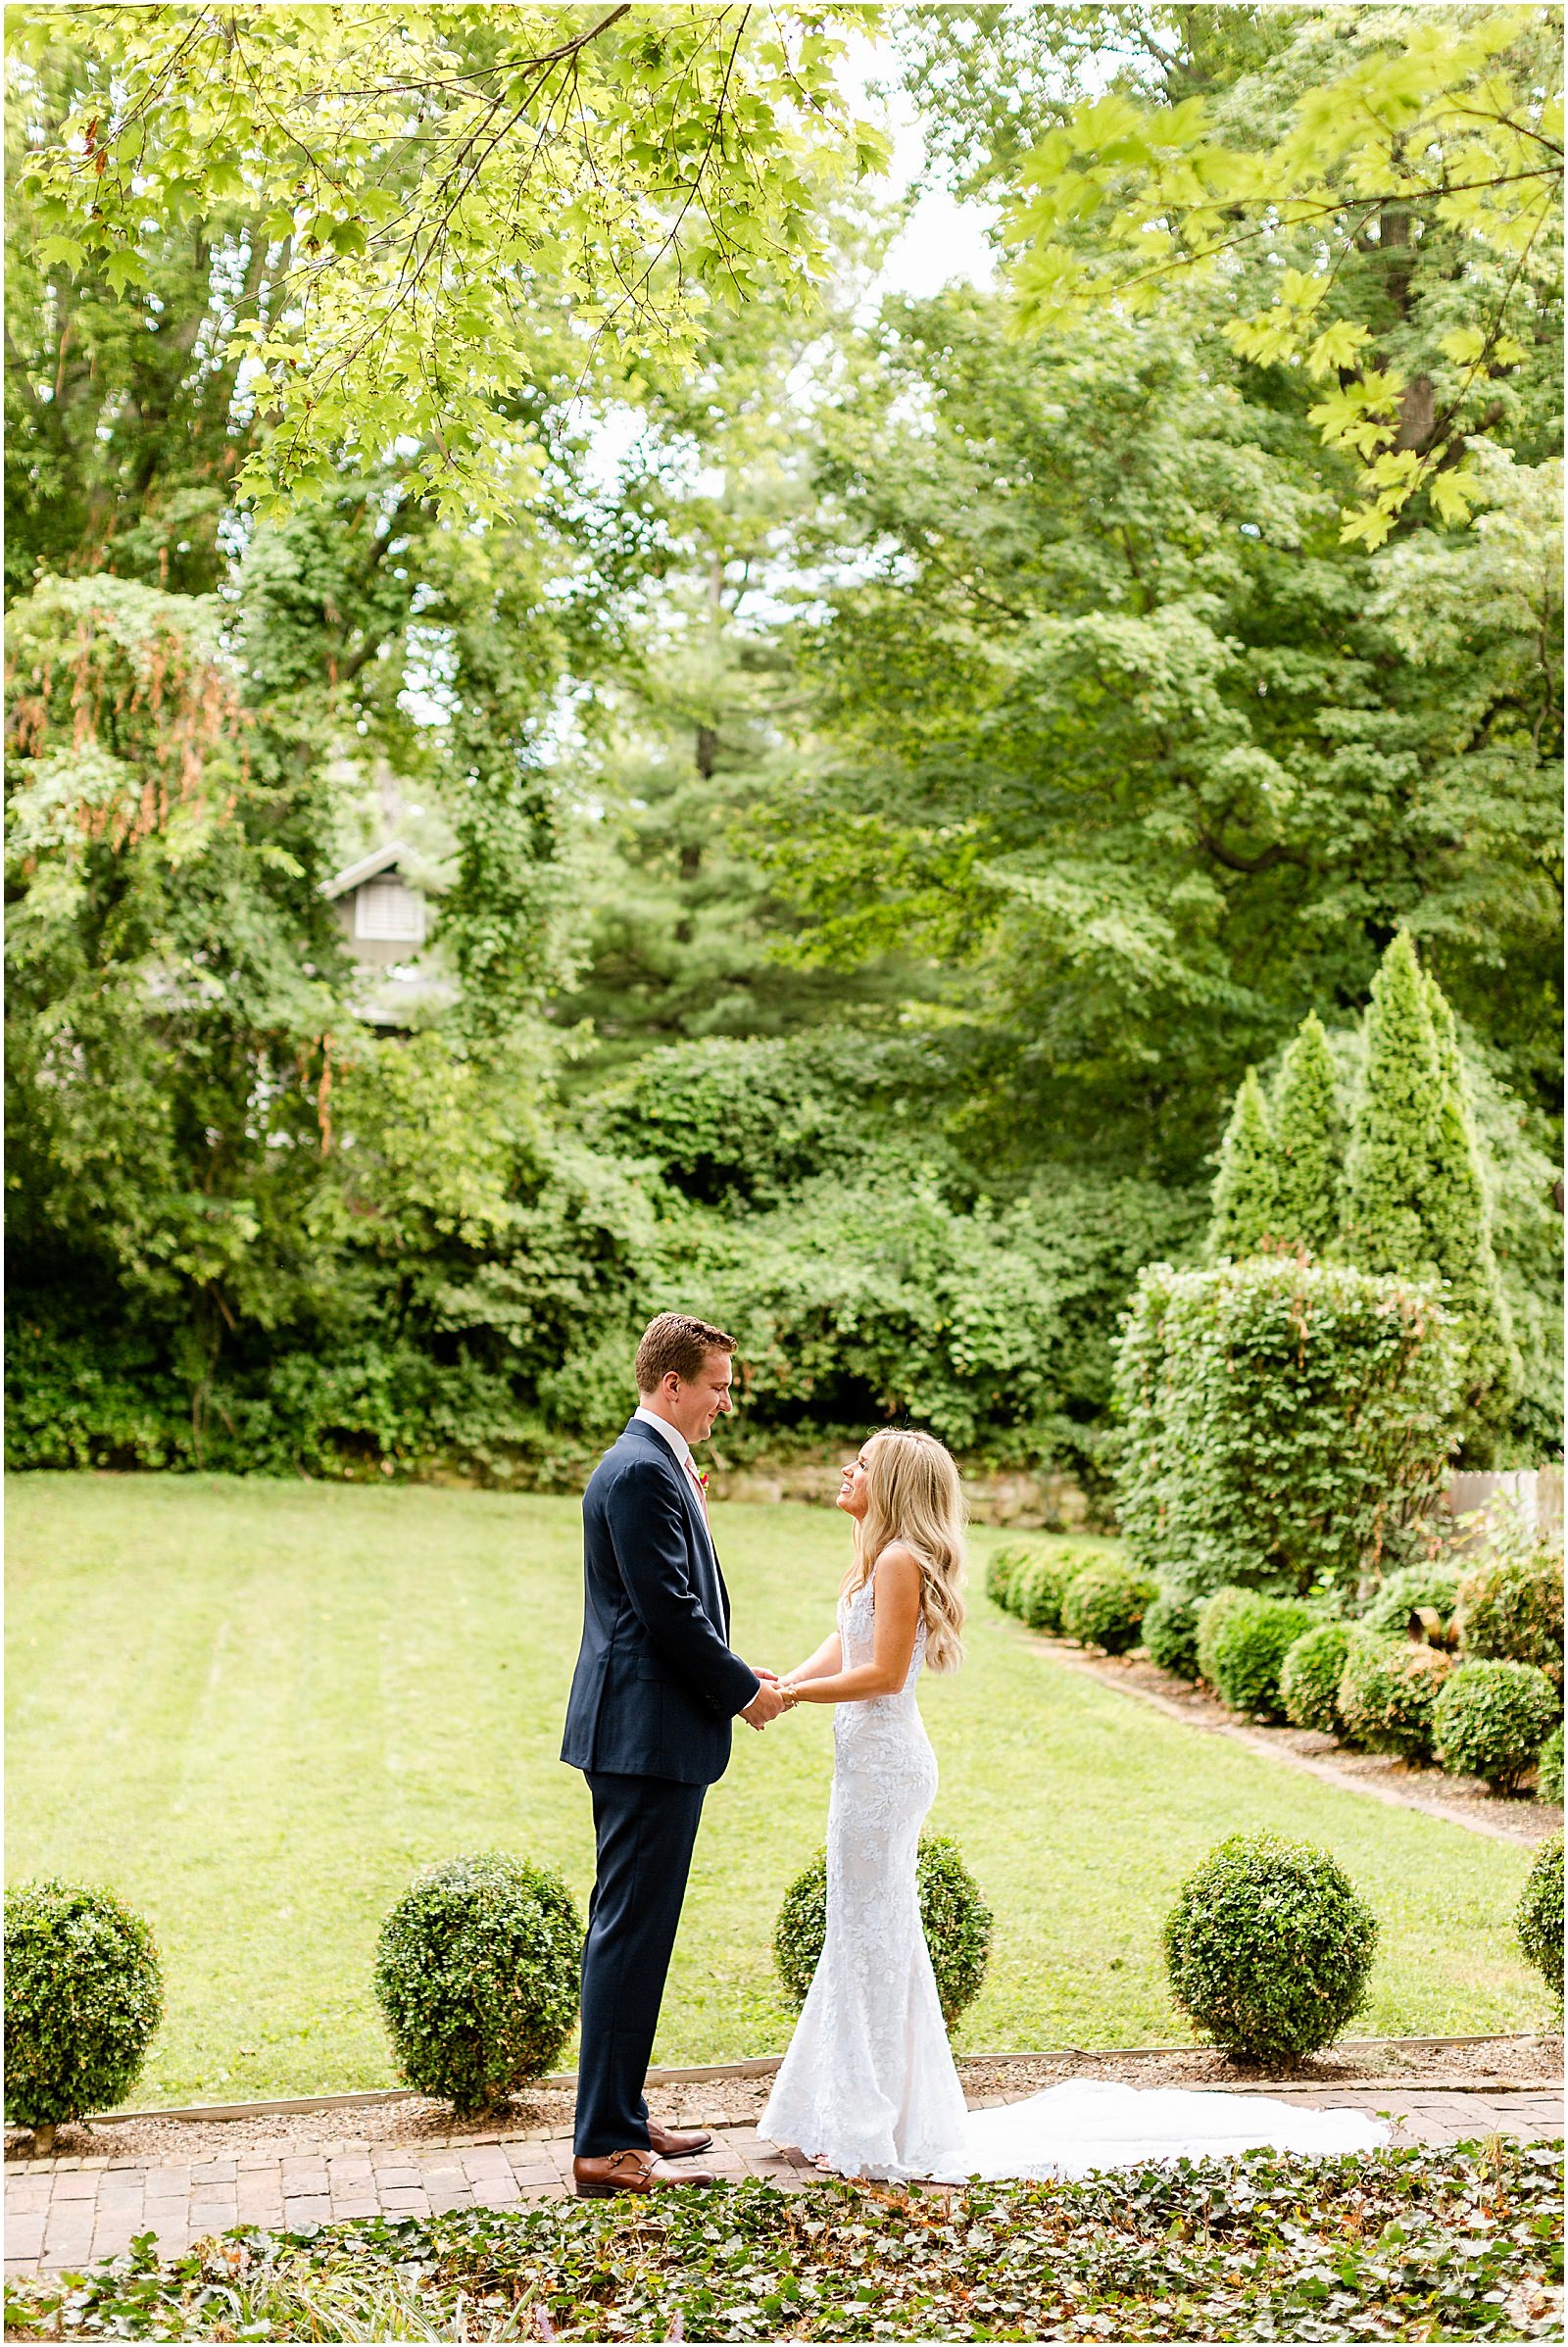 An Evansville Country Club Wedding | Madison and Christiaan | Bret and Brandie | Evansville Photographers | @bretandbrandie-0091.jpg